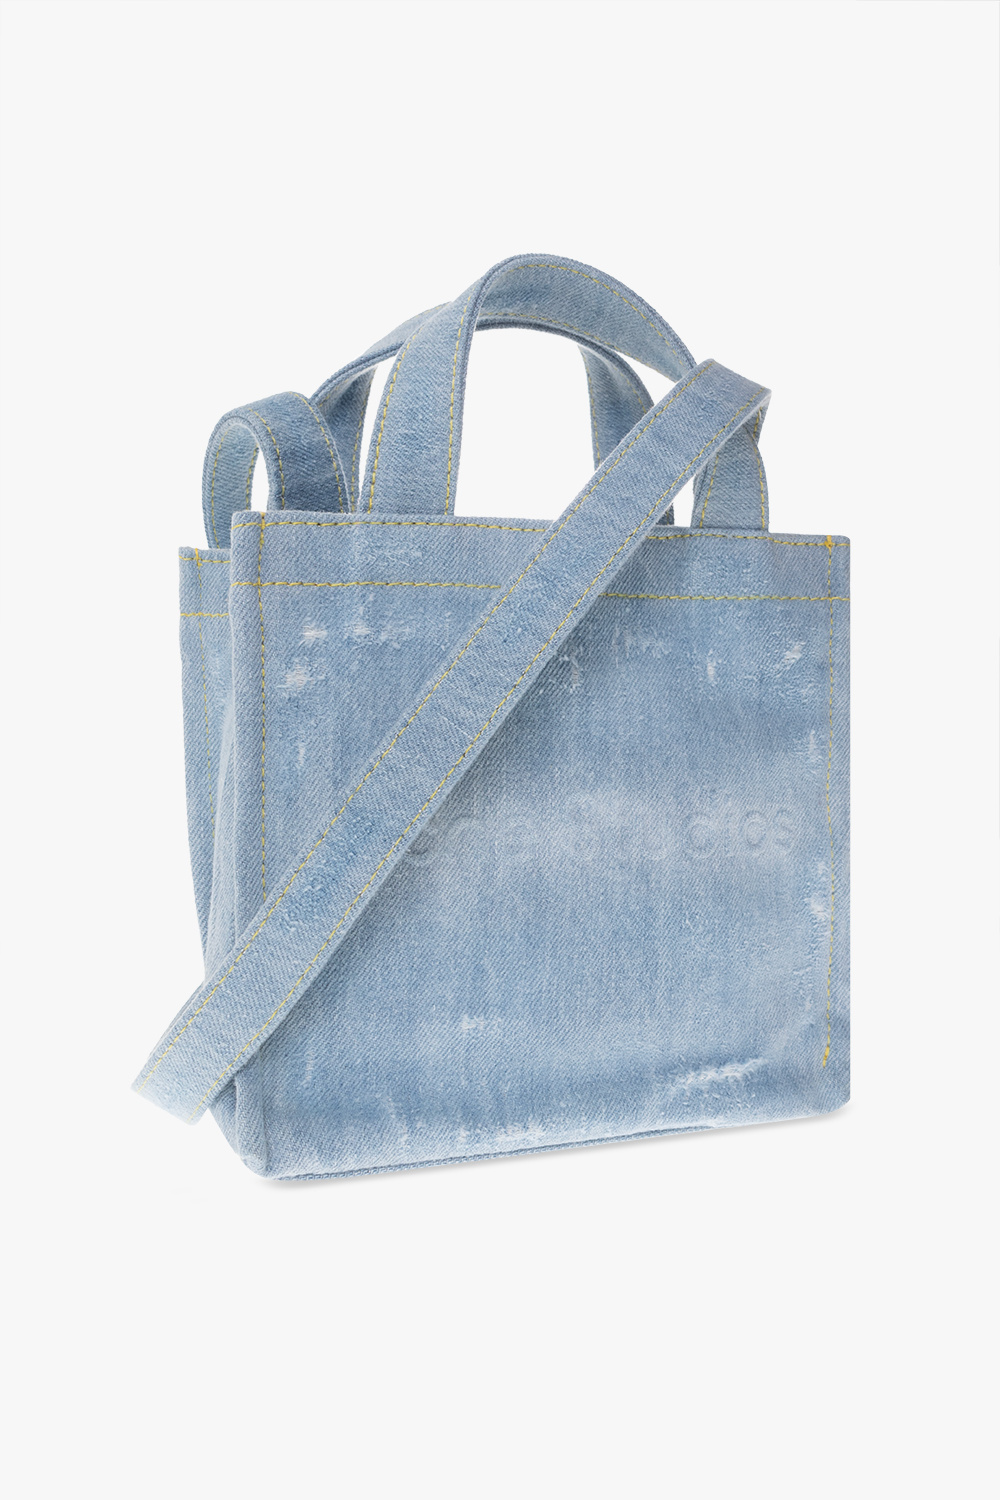 Acne Studios longchamp medium le pliage cuir top handle bag item